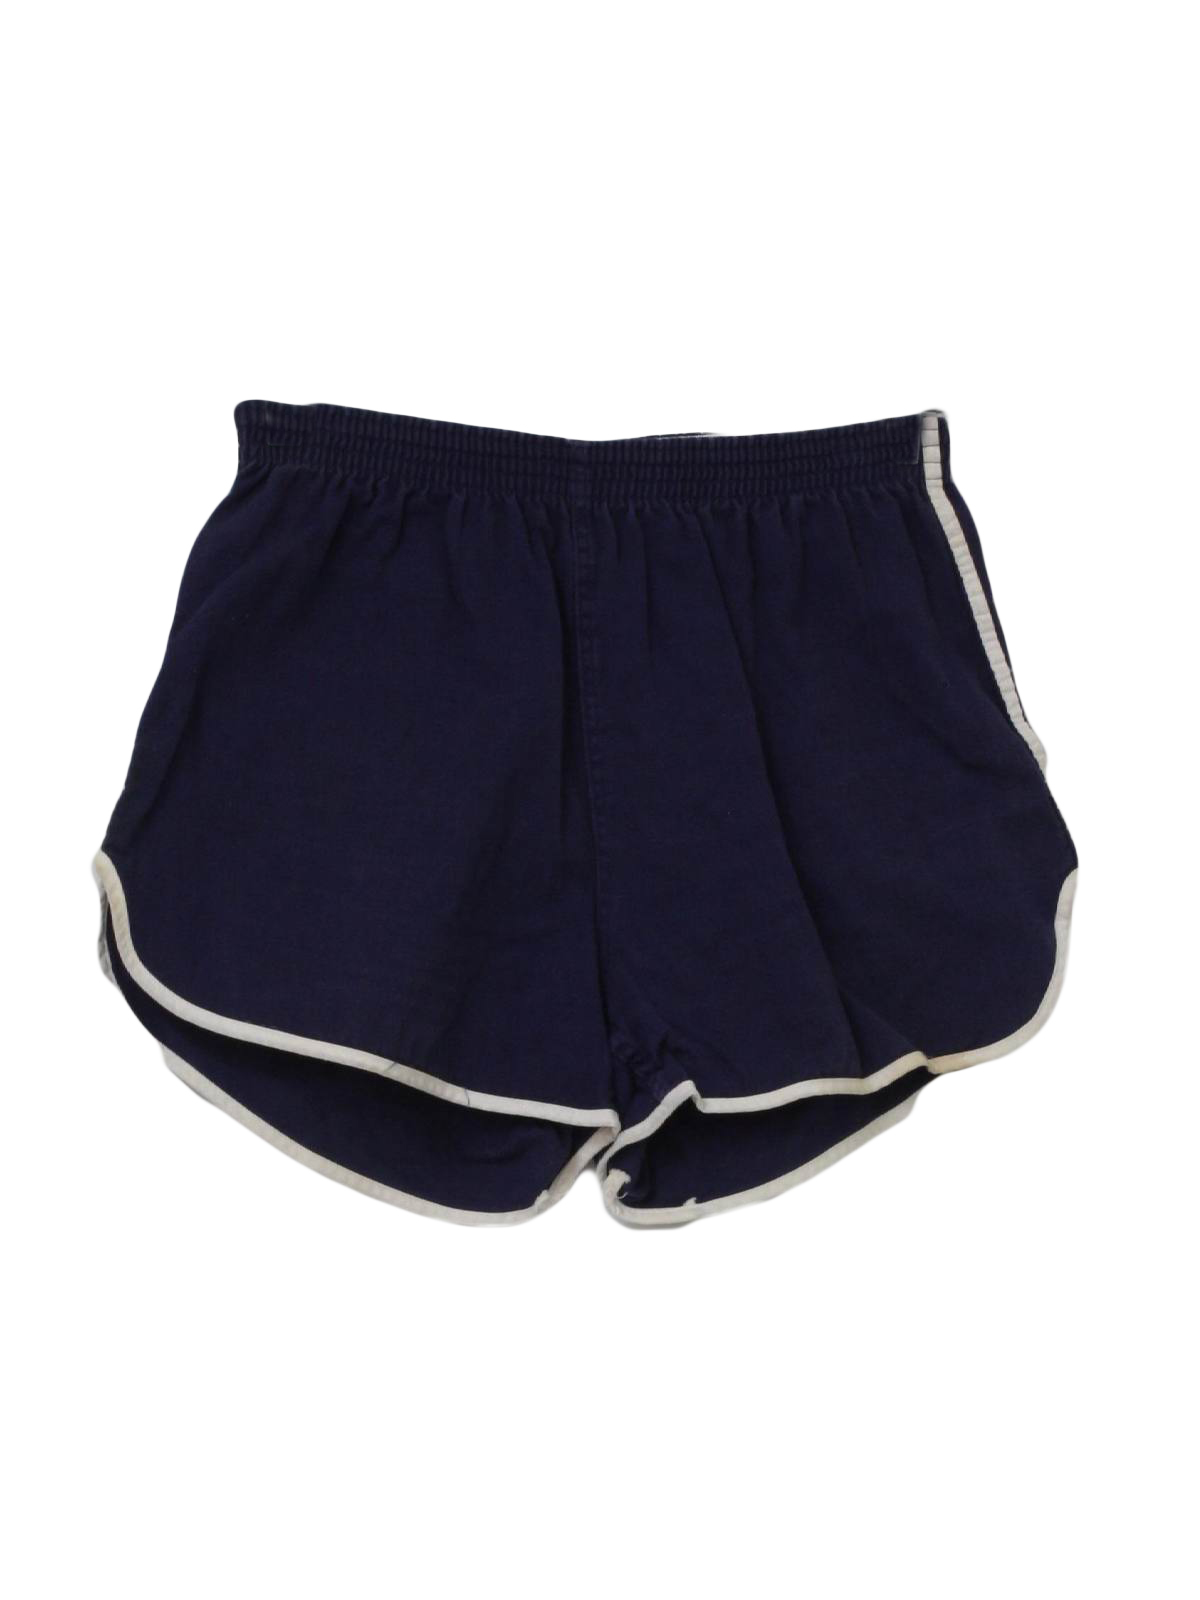 Retro 1970s Shorts: 70s -Healthknit- Unisex navy blue background cotton ...